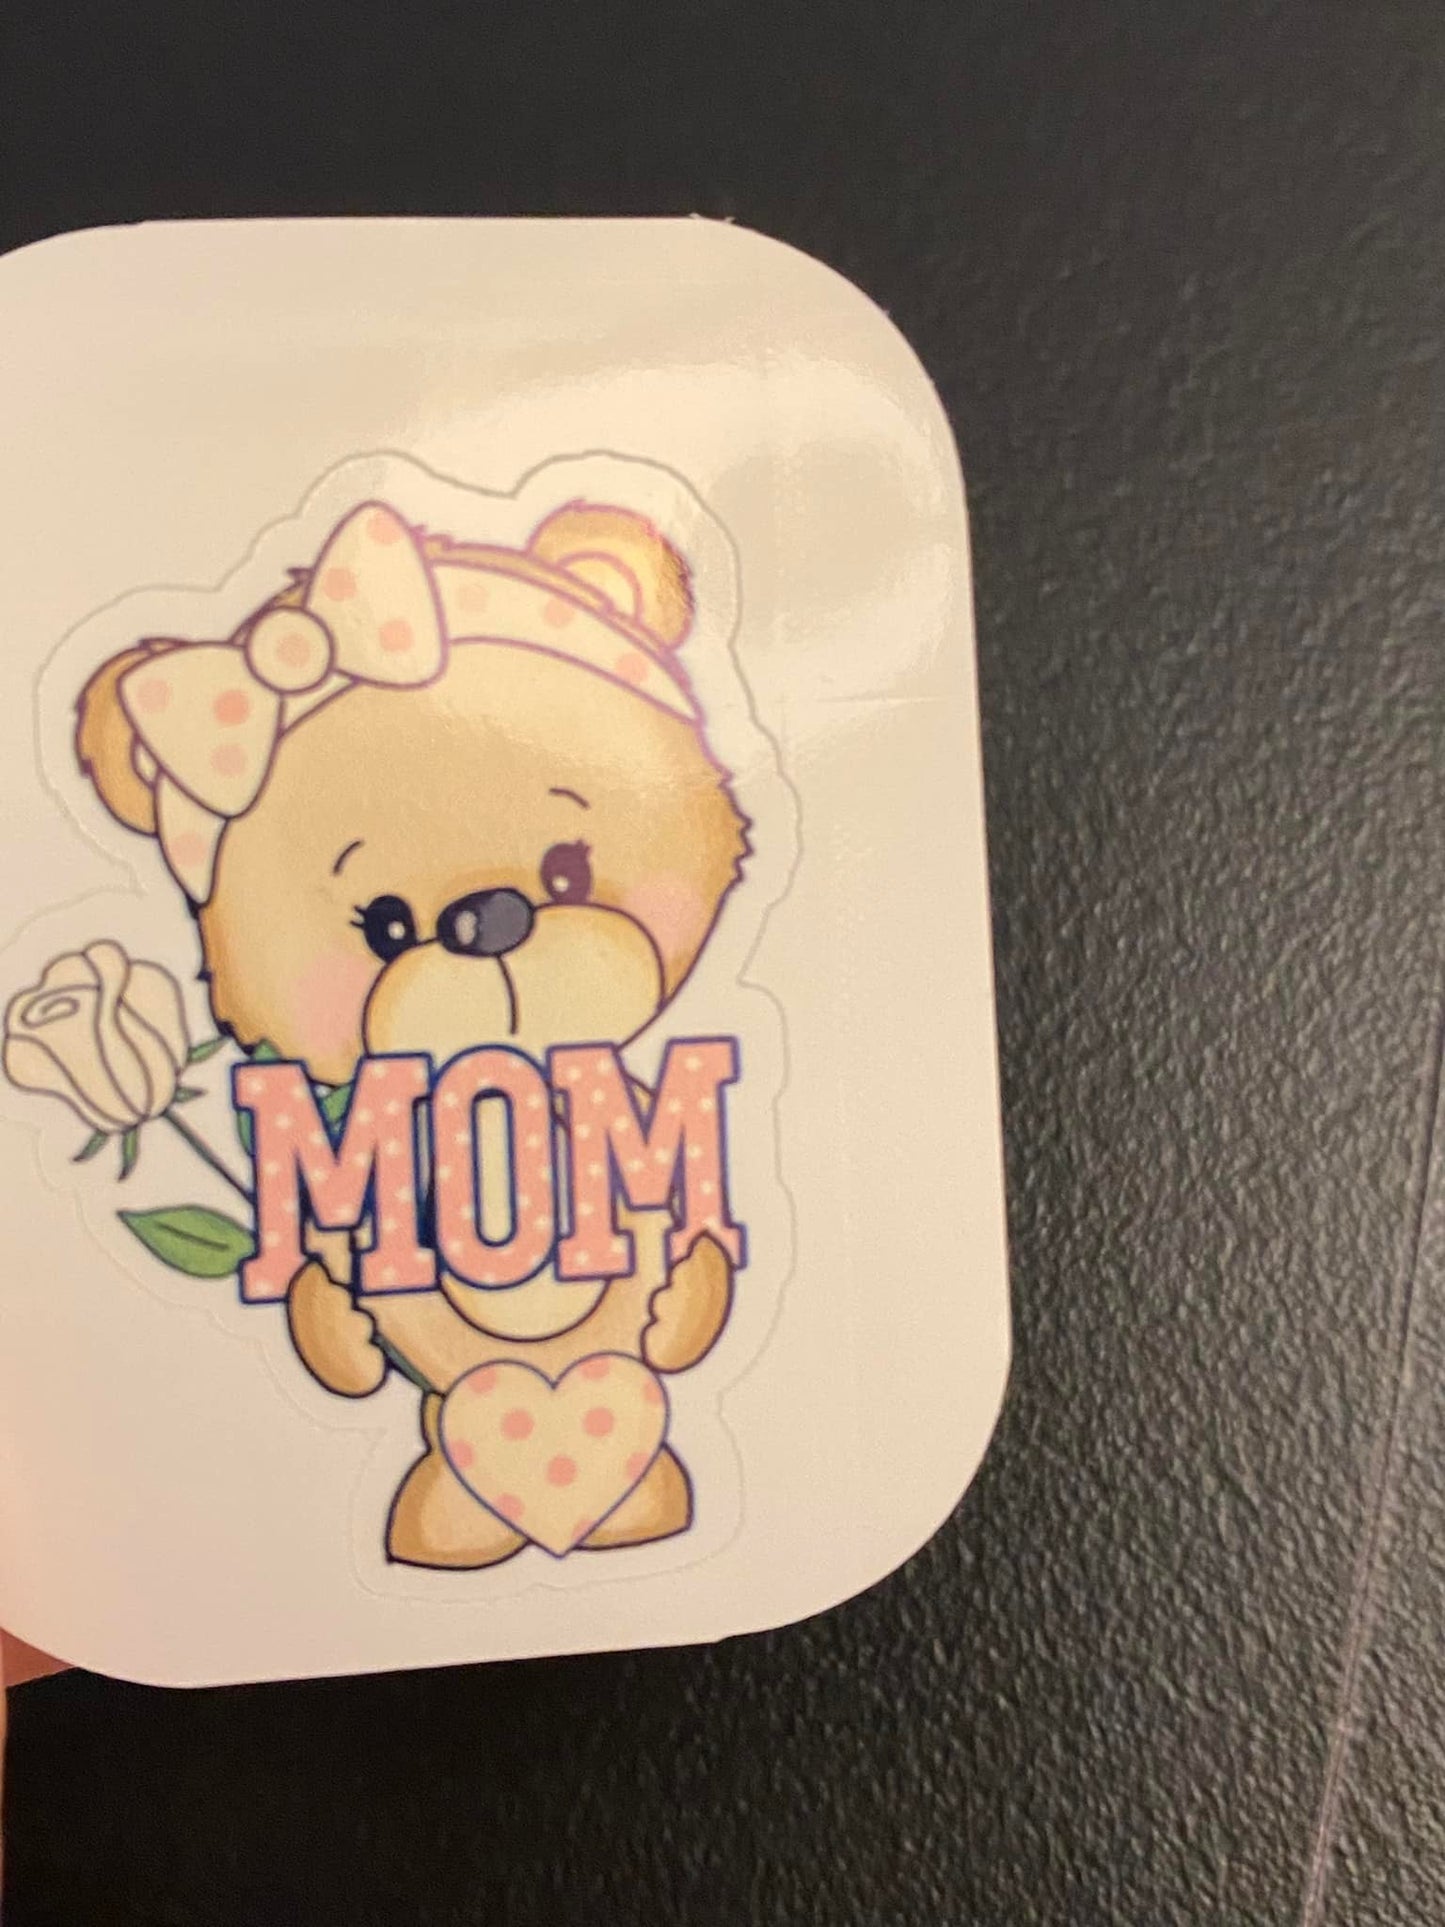 Bear with Headband with Mom Sticker